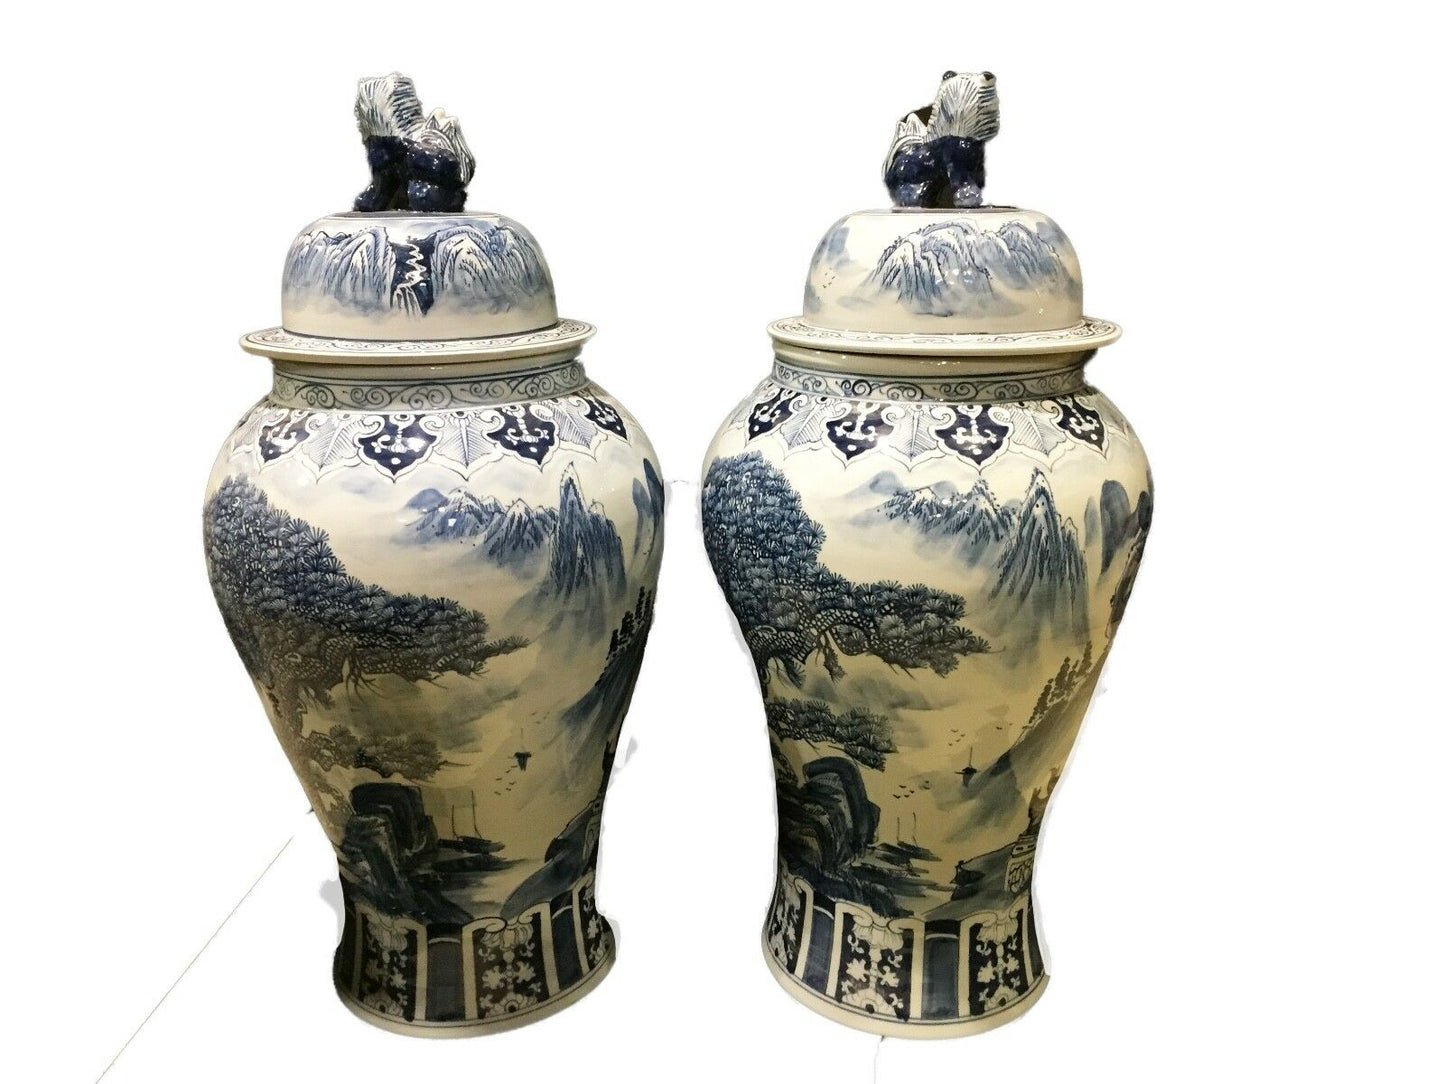 #951 Mansion Size Chinoiserie B & W Porcelain Landscape Ginger Jars - a Pair 36" H